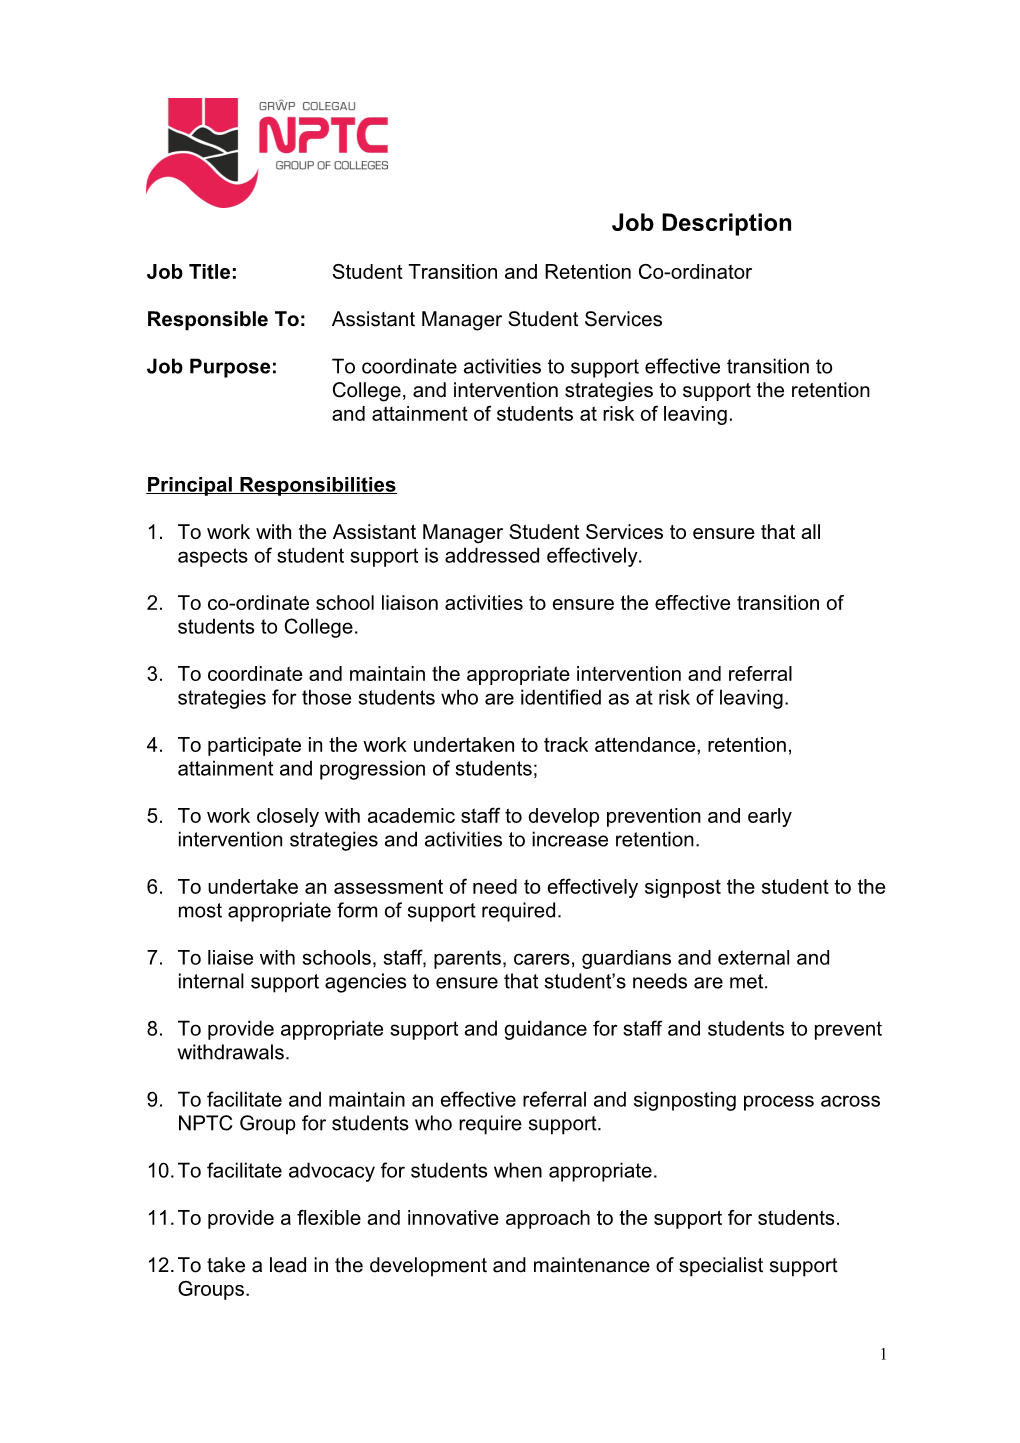 Job Title:Student Transition and Retention Co-Ordinator